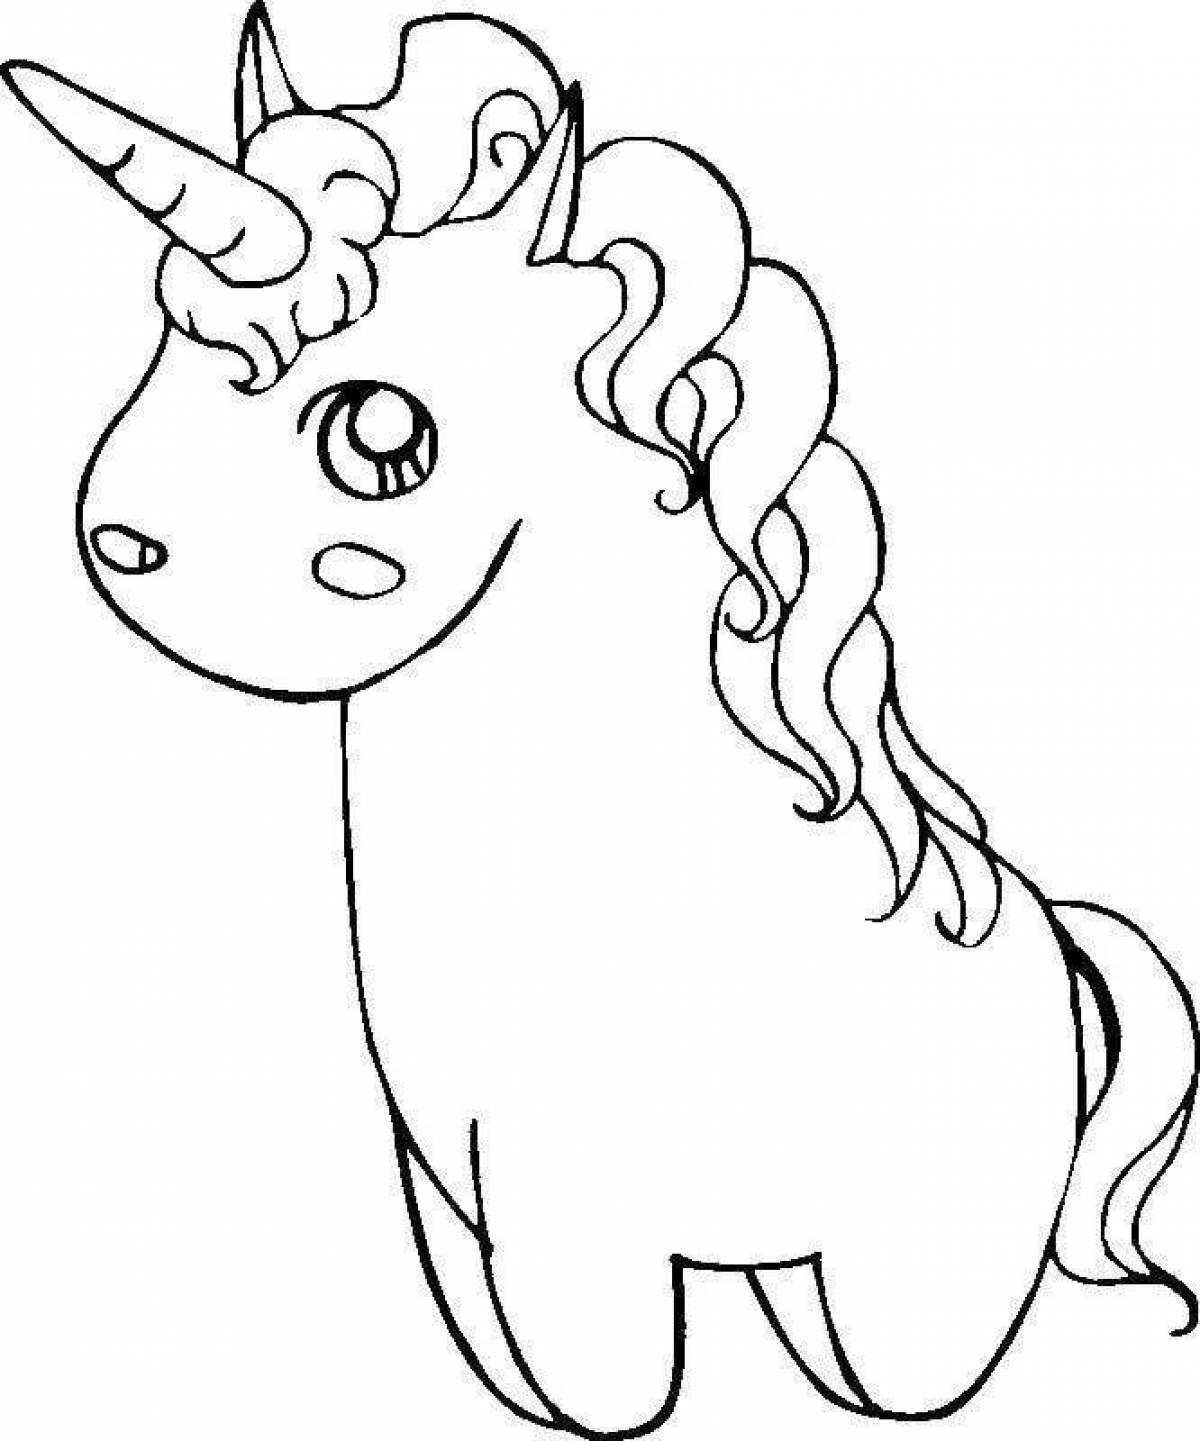 Sky coloring unicorn cute